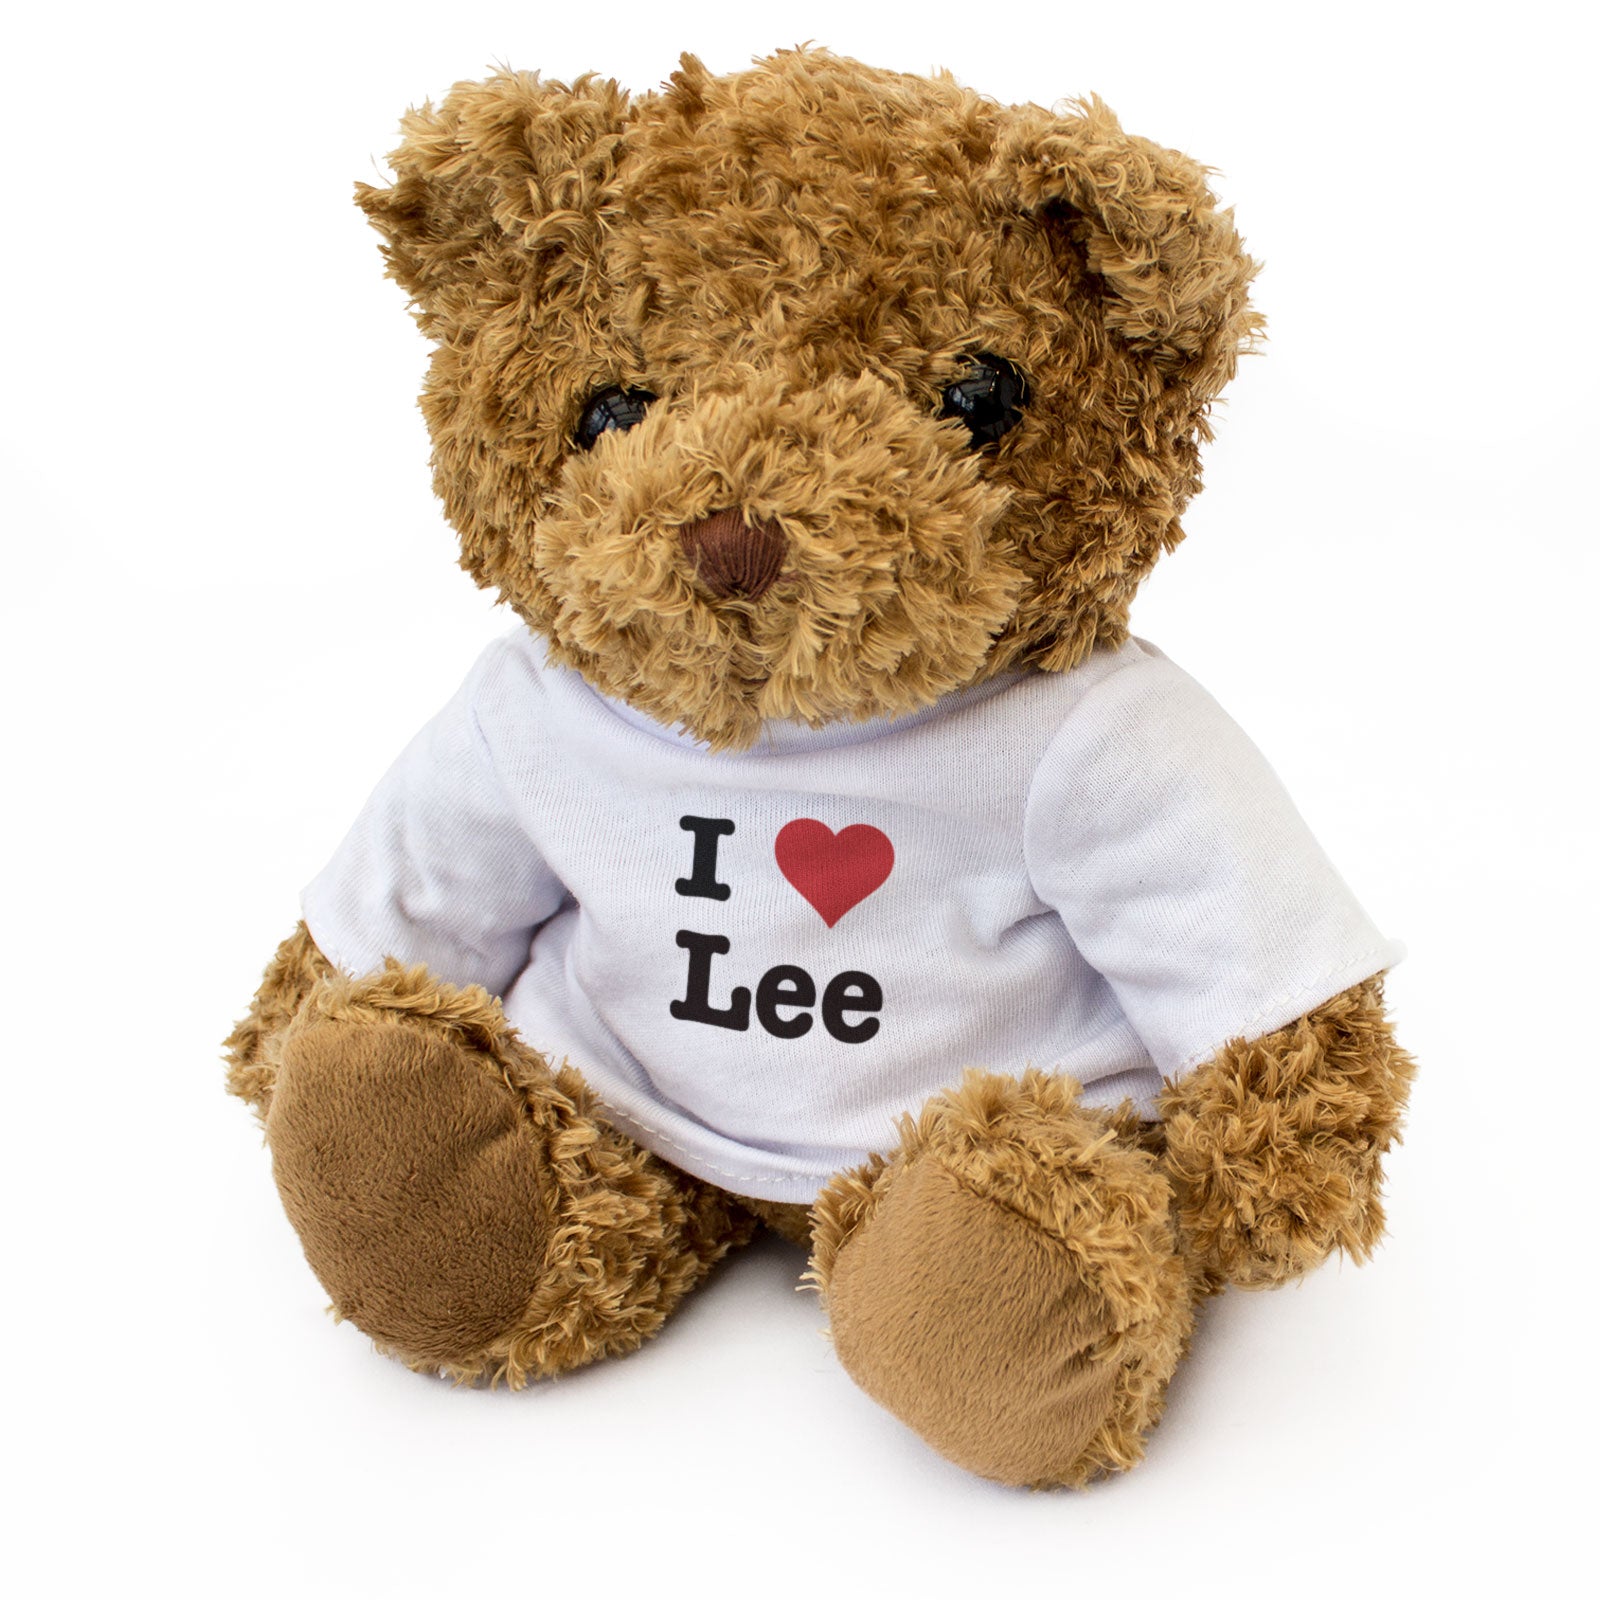 I Love Lee - Teddy Bear